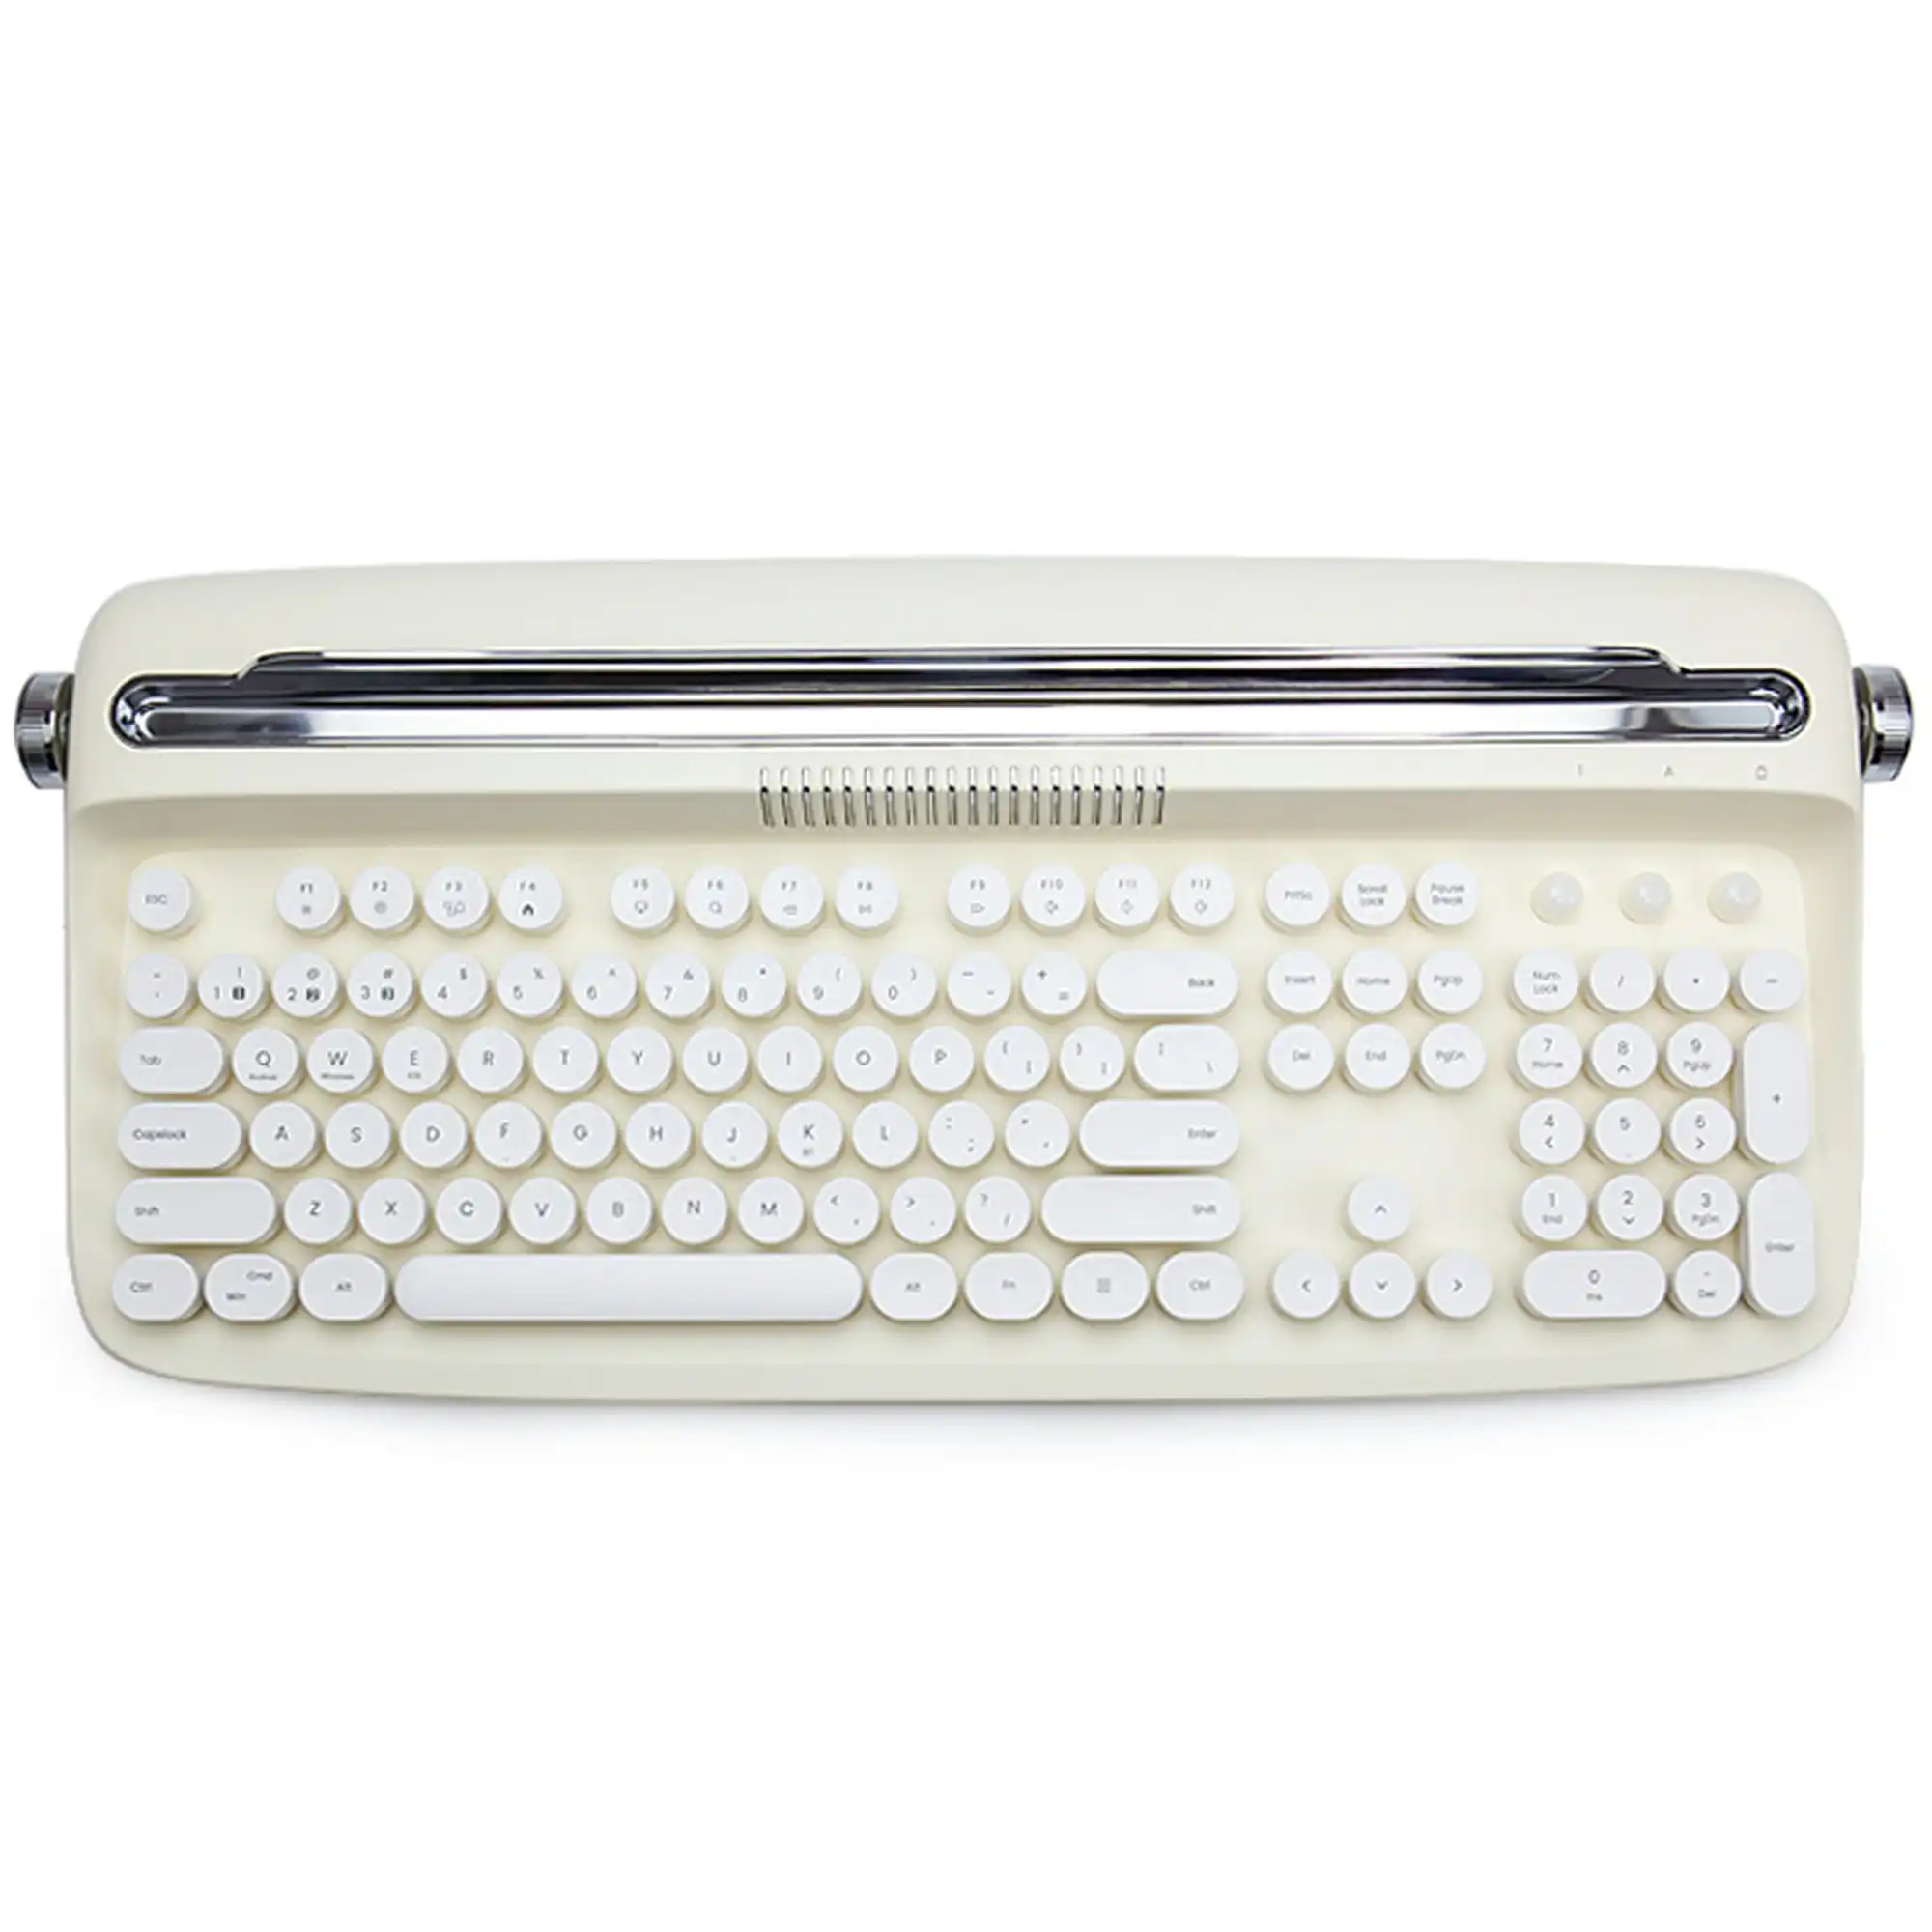 Todo Retro Typewriter Bluetooth Wireless Keyboard Tablet Holder 104 Key Mac Win Android BT 5.0 - Ivory